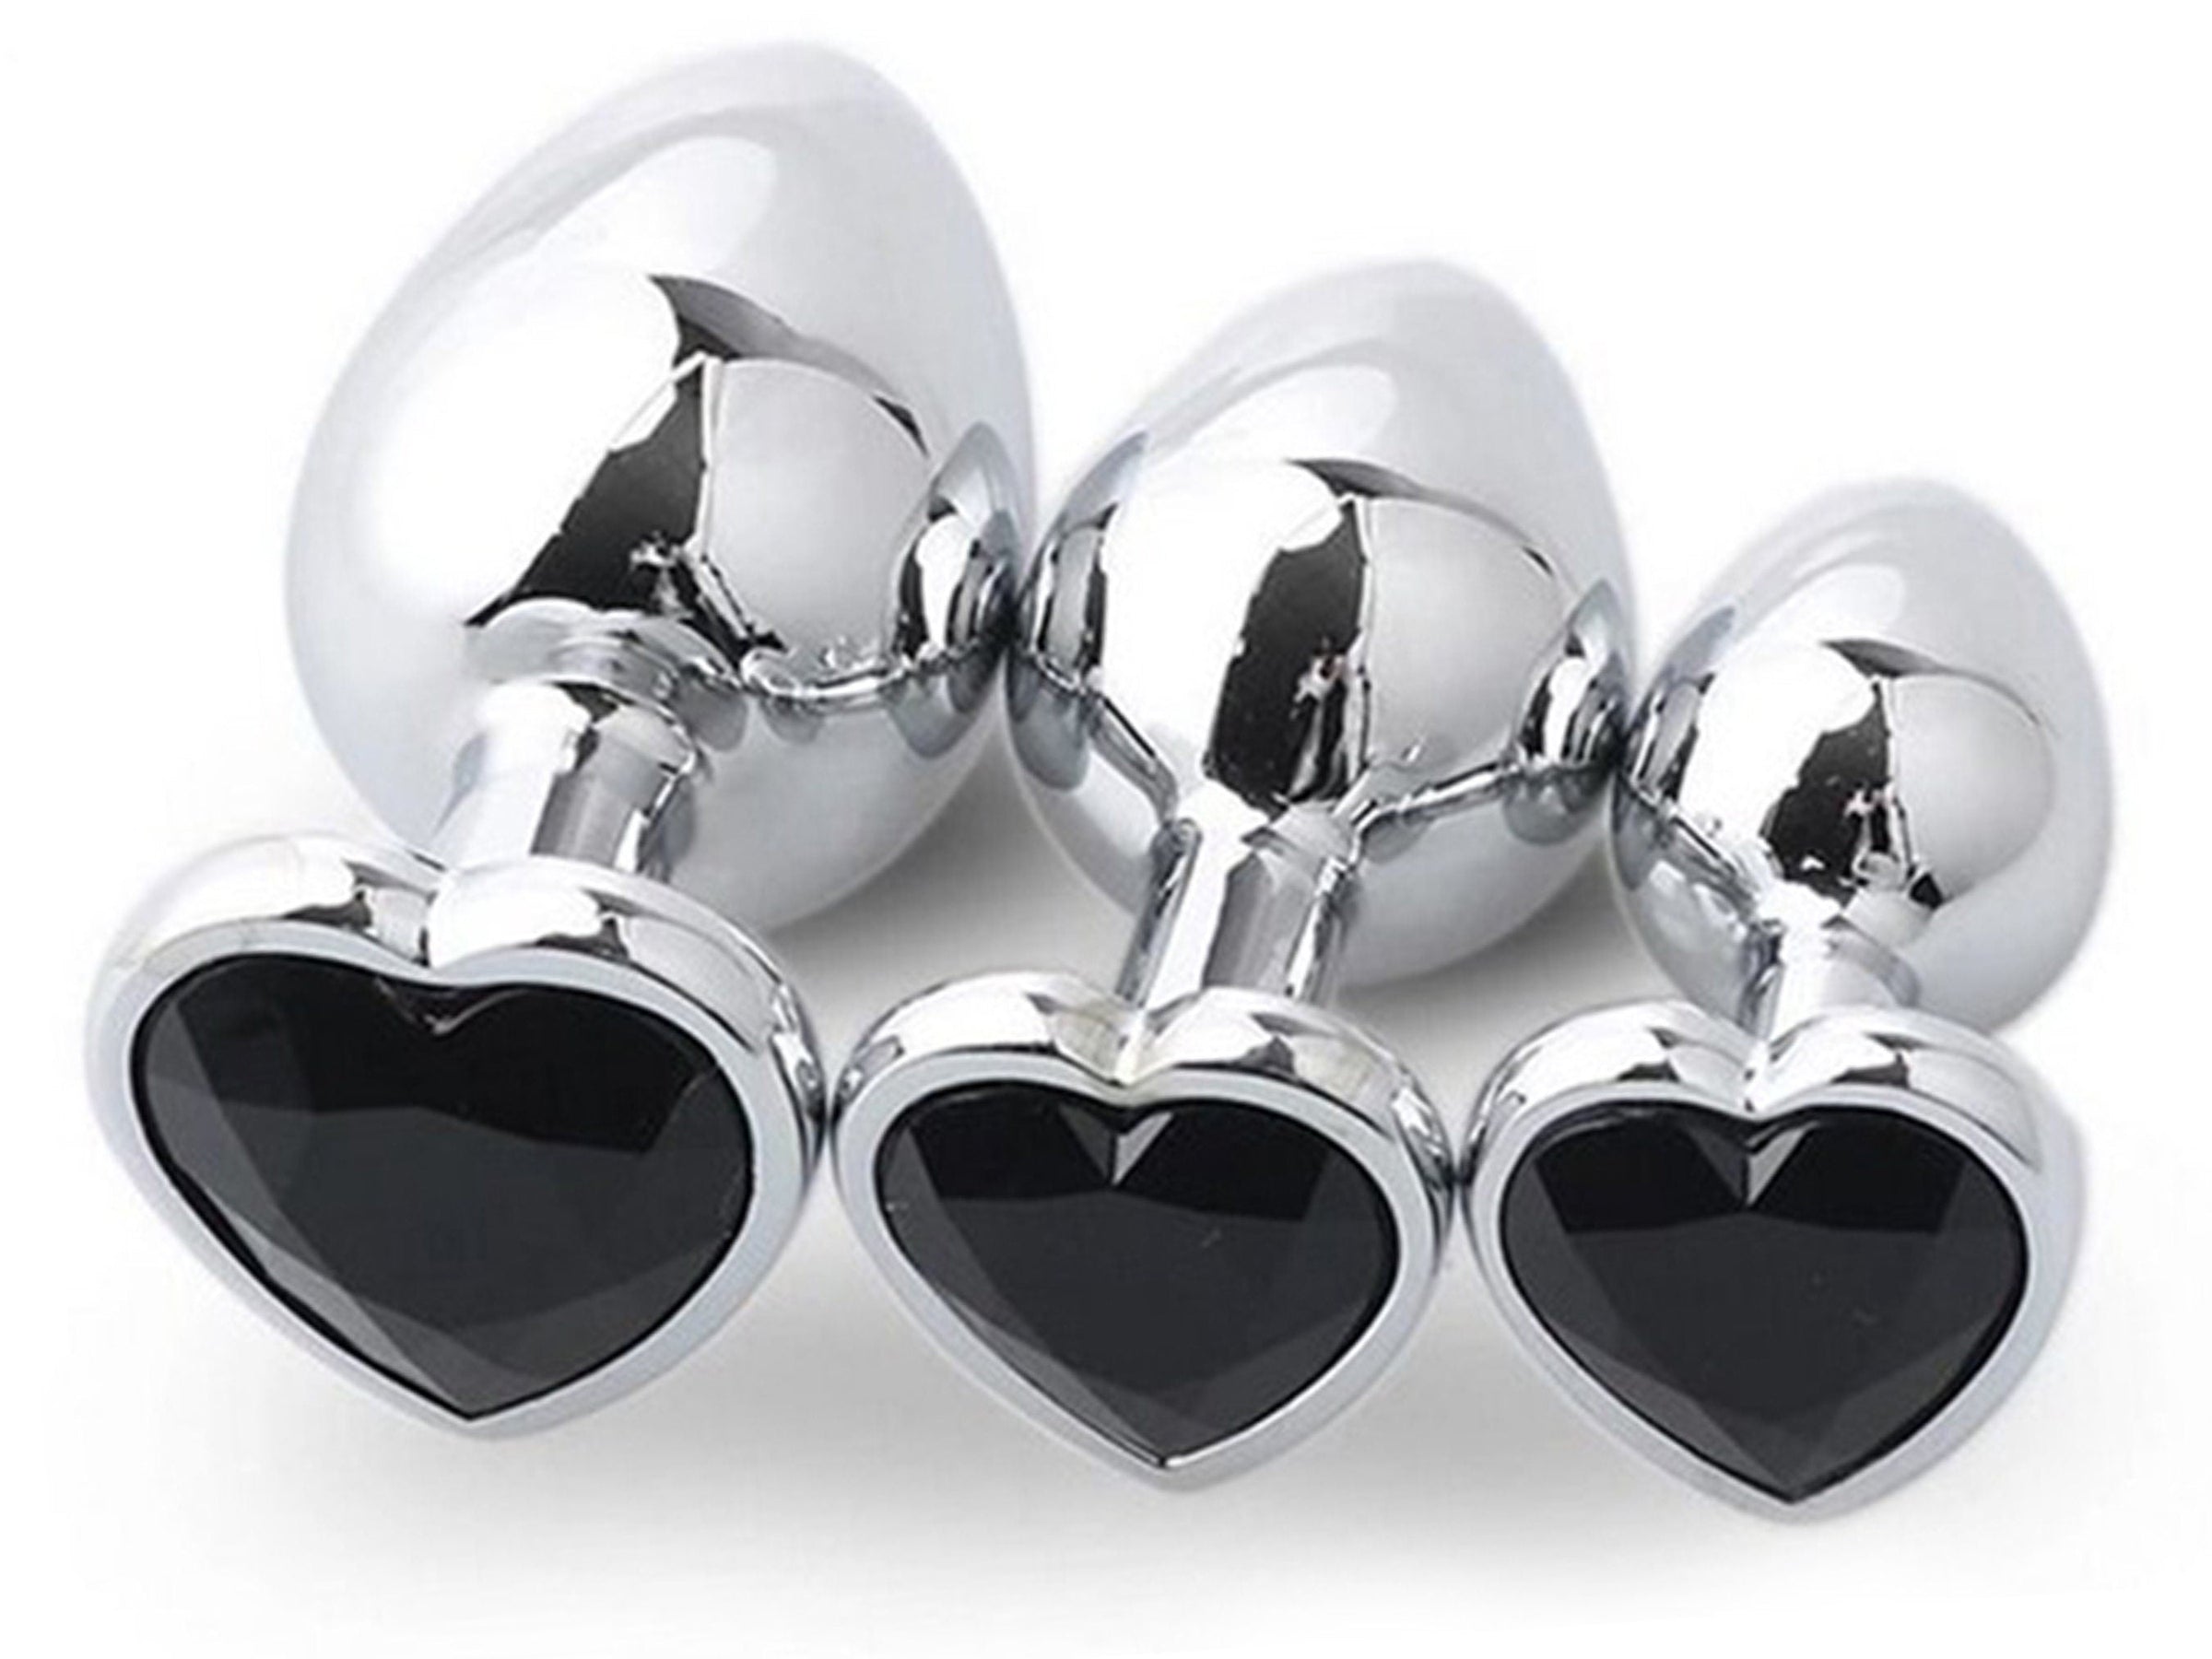 BLACK HEART Shaped Acrylic Crystal Butt plug 3 sizes anal toy sex jewe